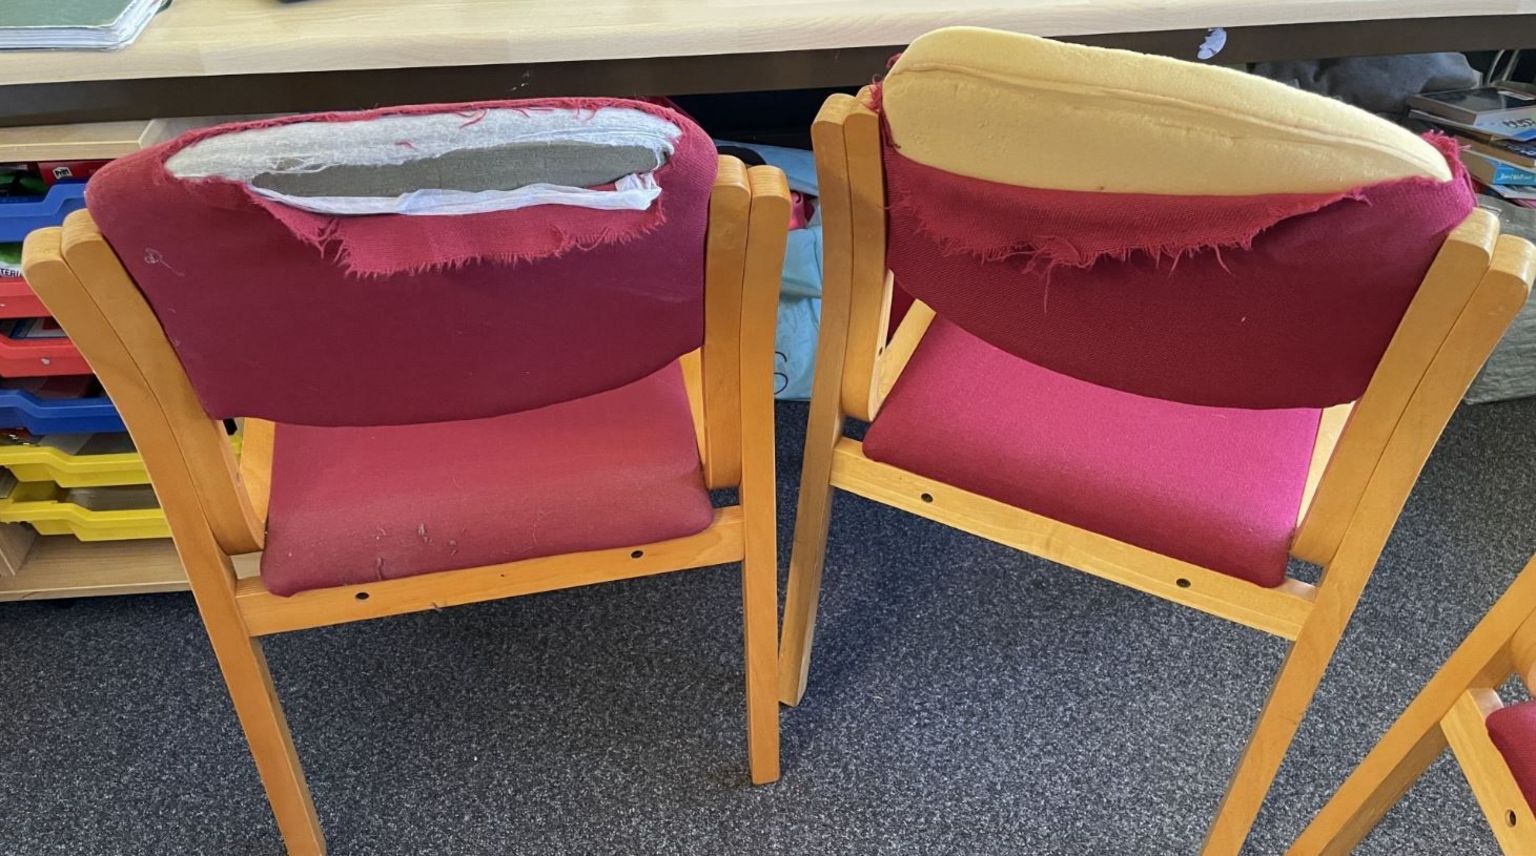 Chairs ruined 